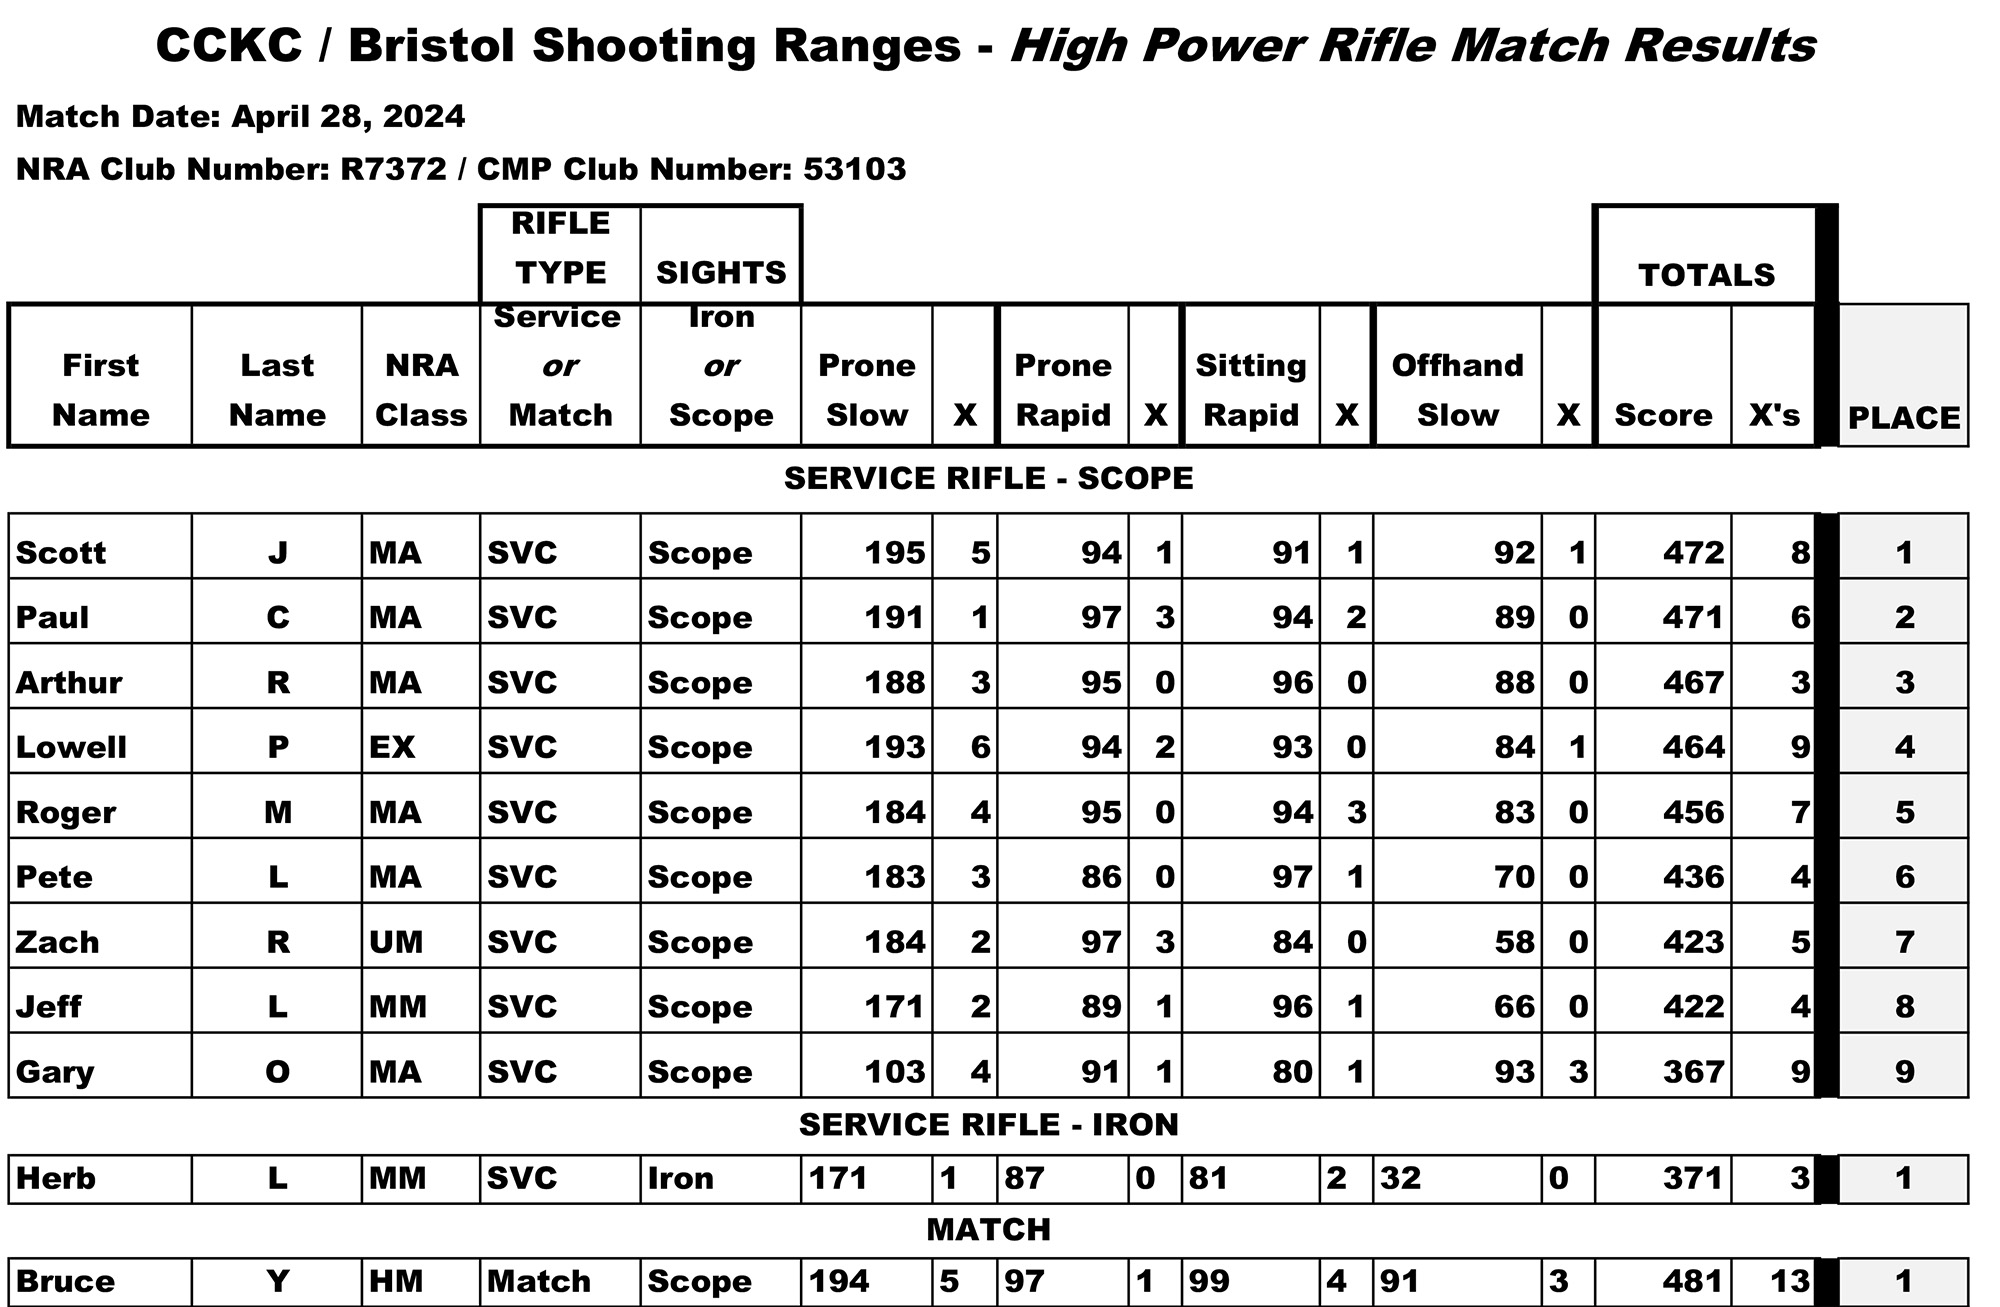 04-28-2024 Match Score High Power Rifle